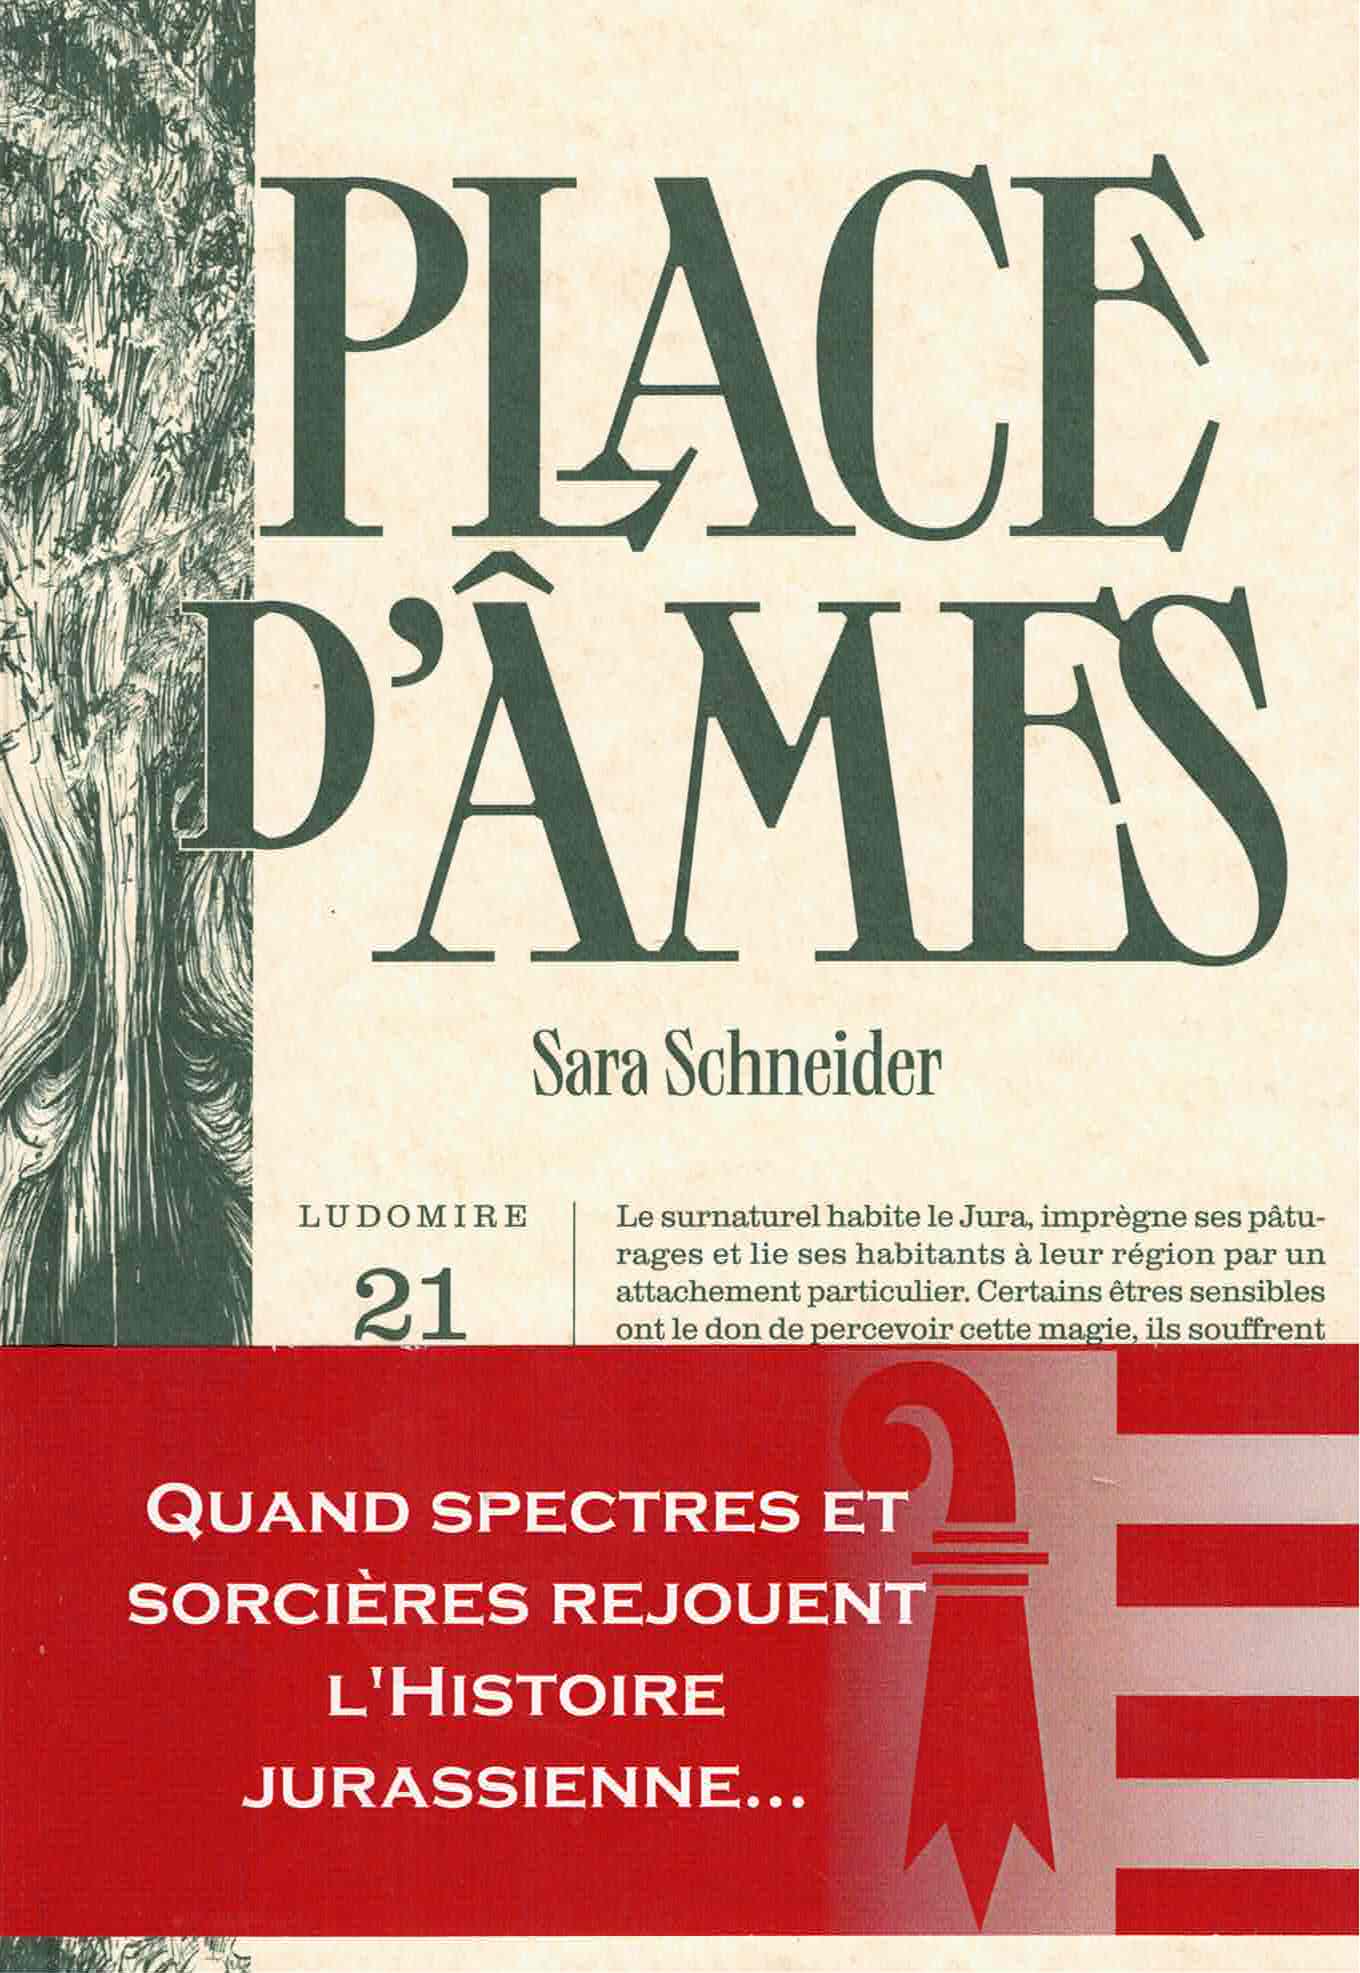 Sara Schneider - Place d'âmes; PVH éditions; LIbrairie du boulevard